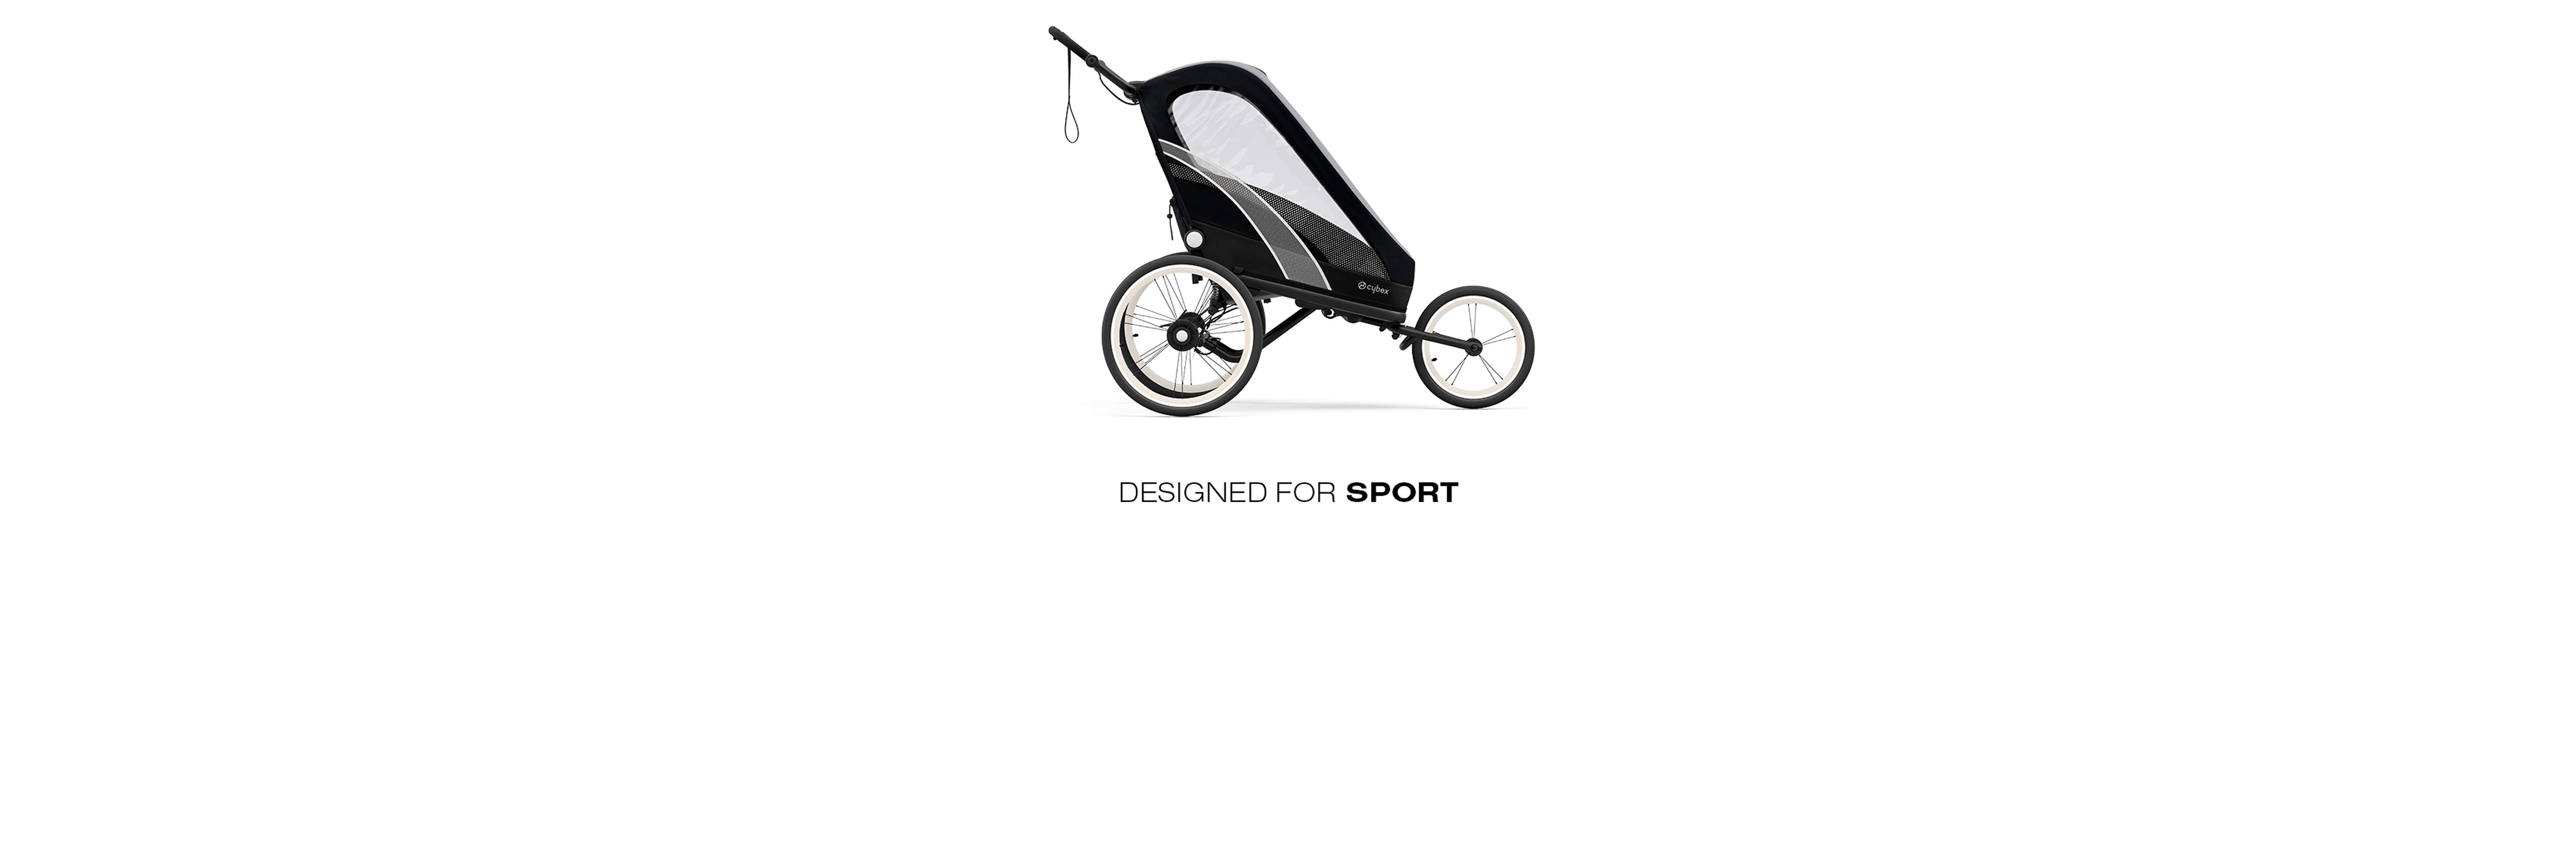 Cybex Gold Sport Zeno Stroller Product Image